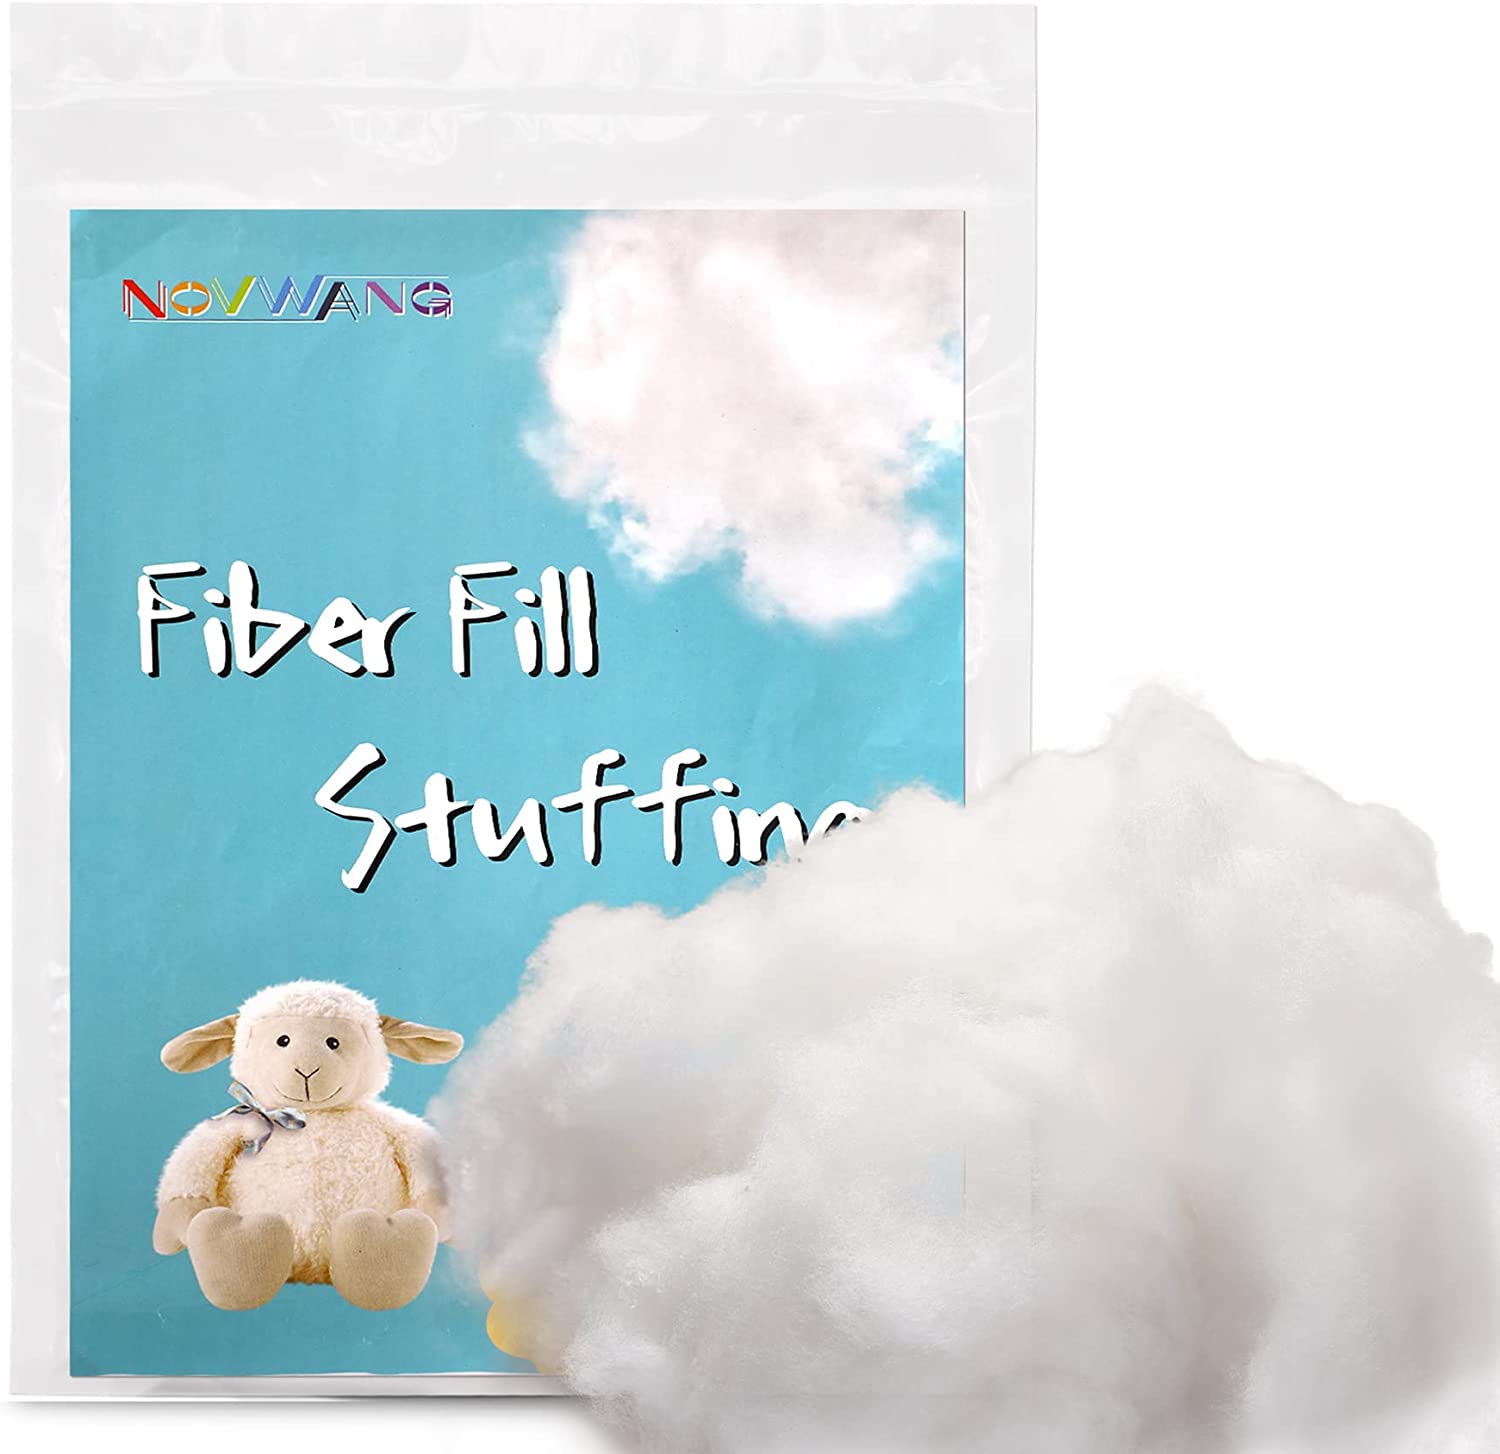 Kollase Polyester Fiberfill, 7oz/200g Premium Fiber Filling Stuffing,  Stuffed Animal Stuffing, Pillow Fluff Stuffing, Filling for Pillow, Stuffed